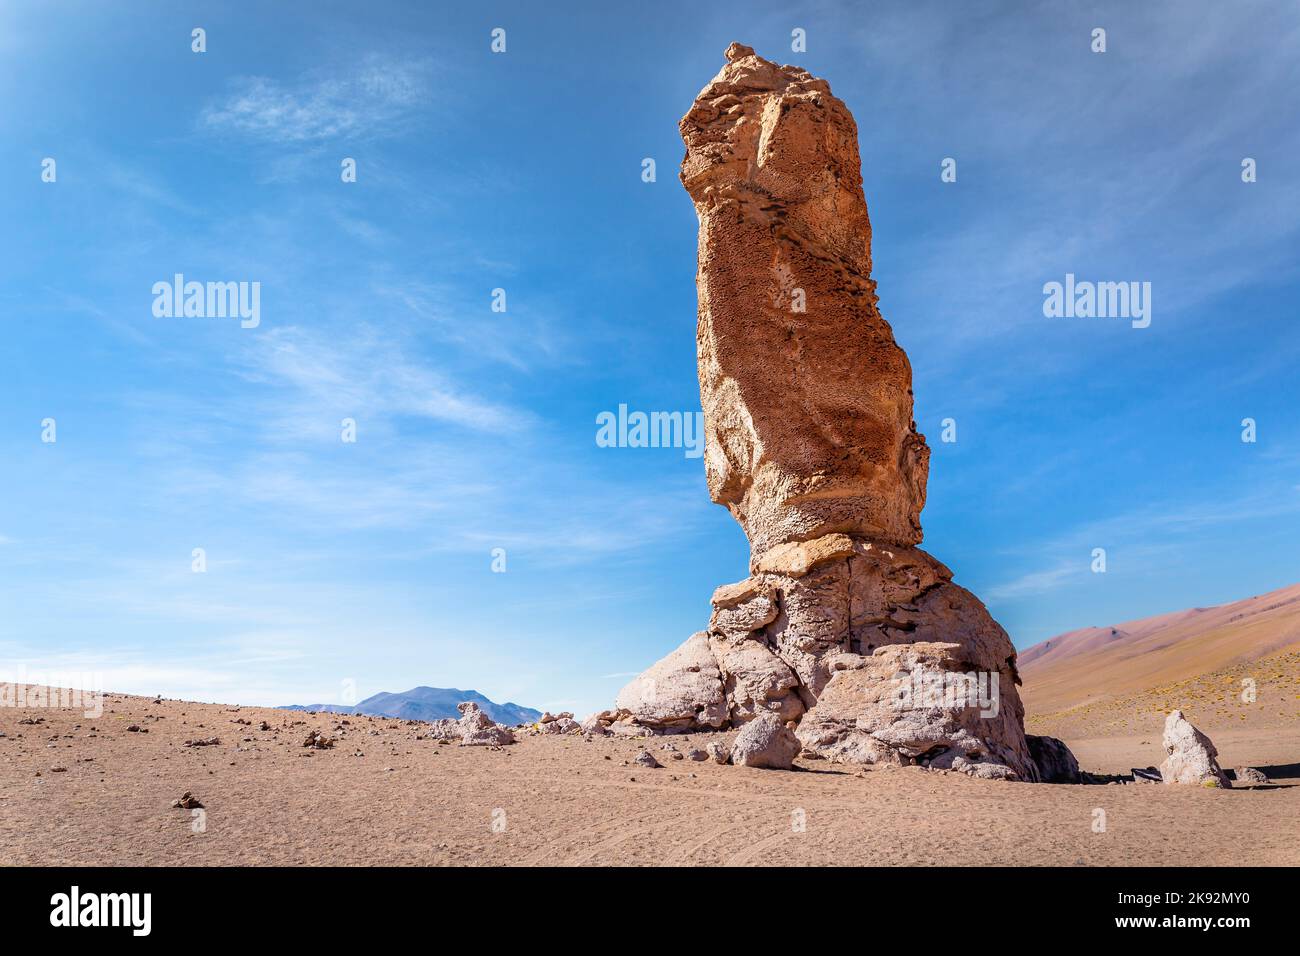 Moai El Indio, The Indian, natural monument, Atacama Desert, Chile Stock Photo